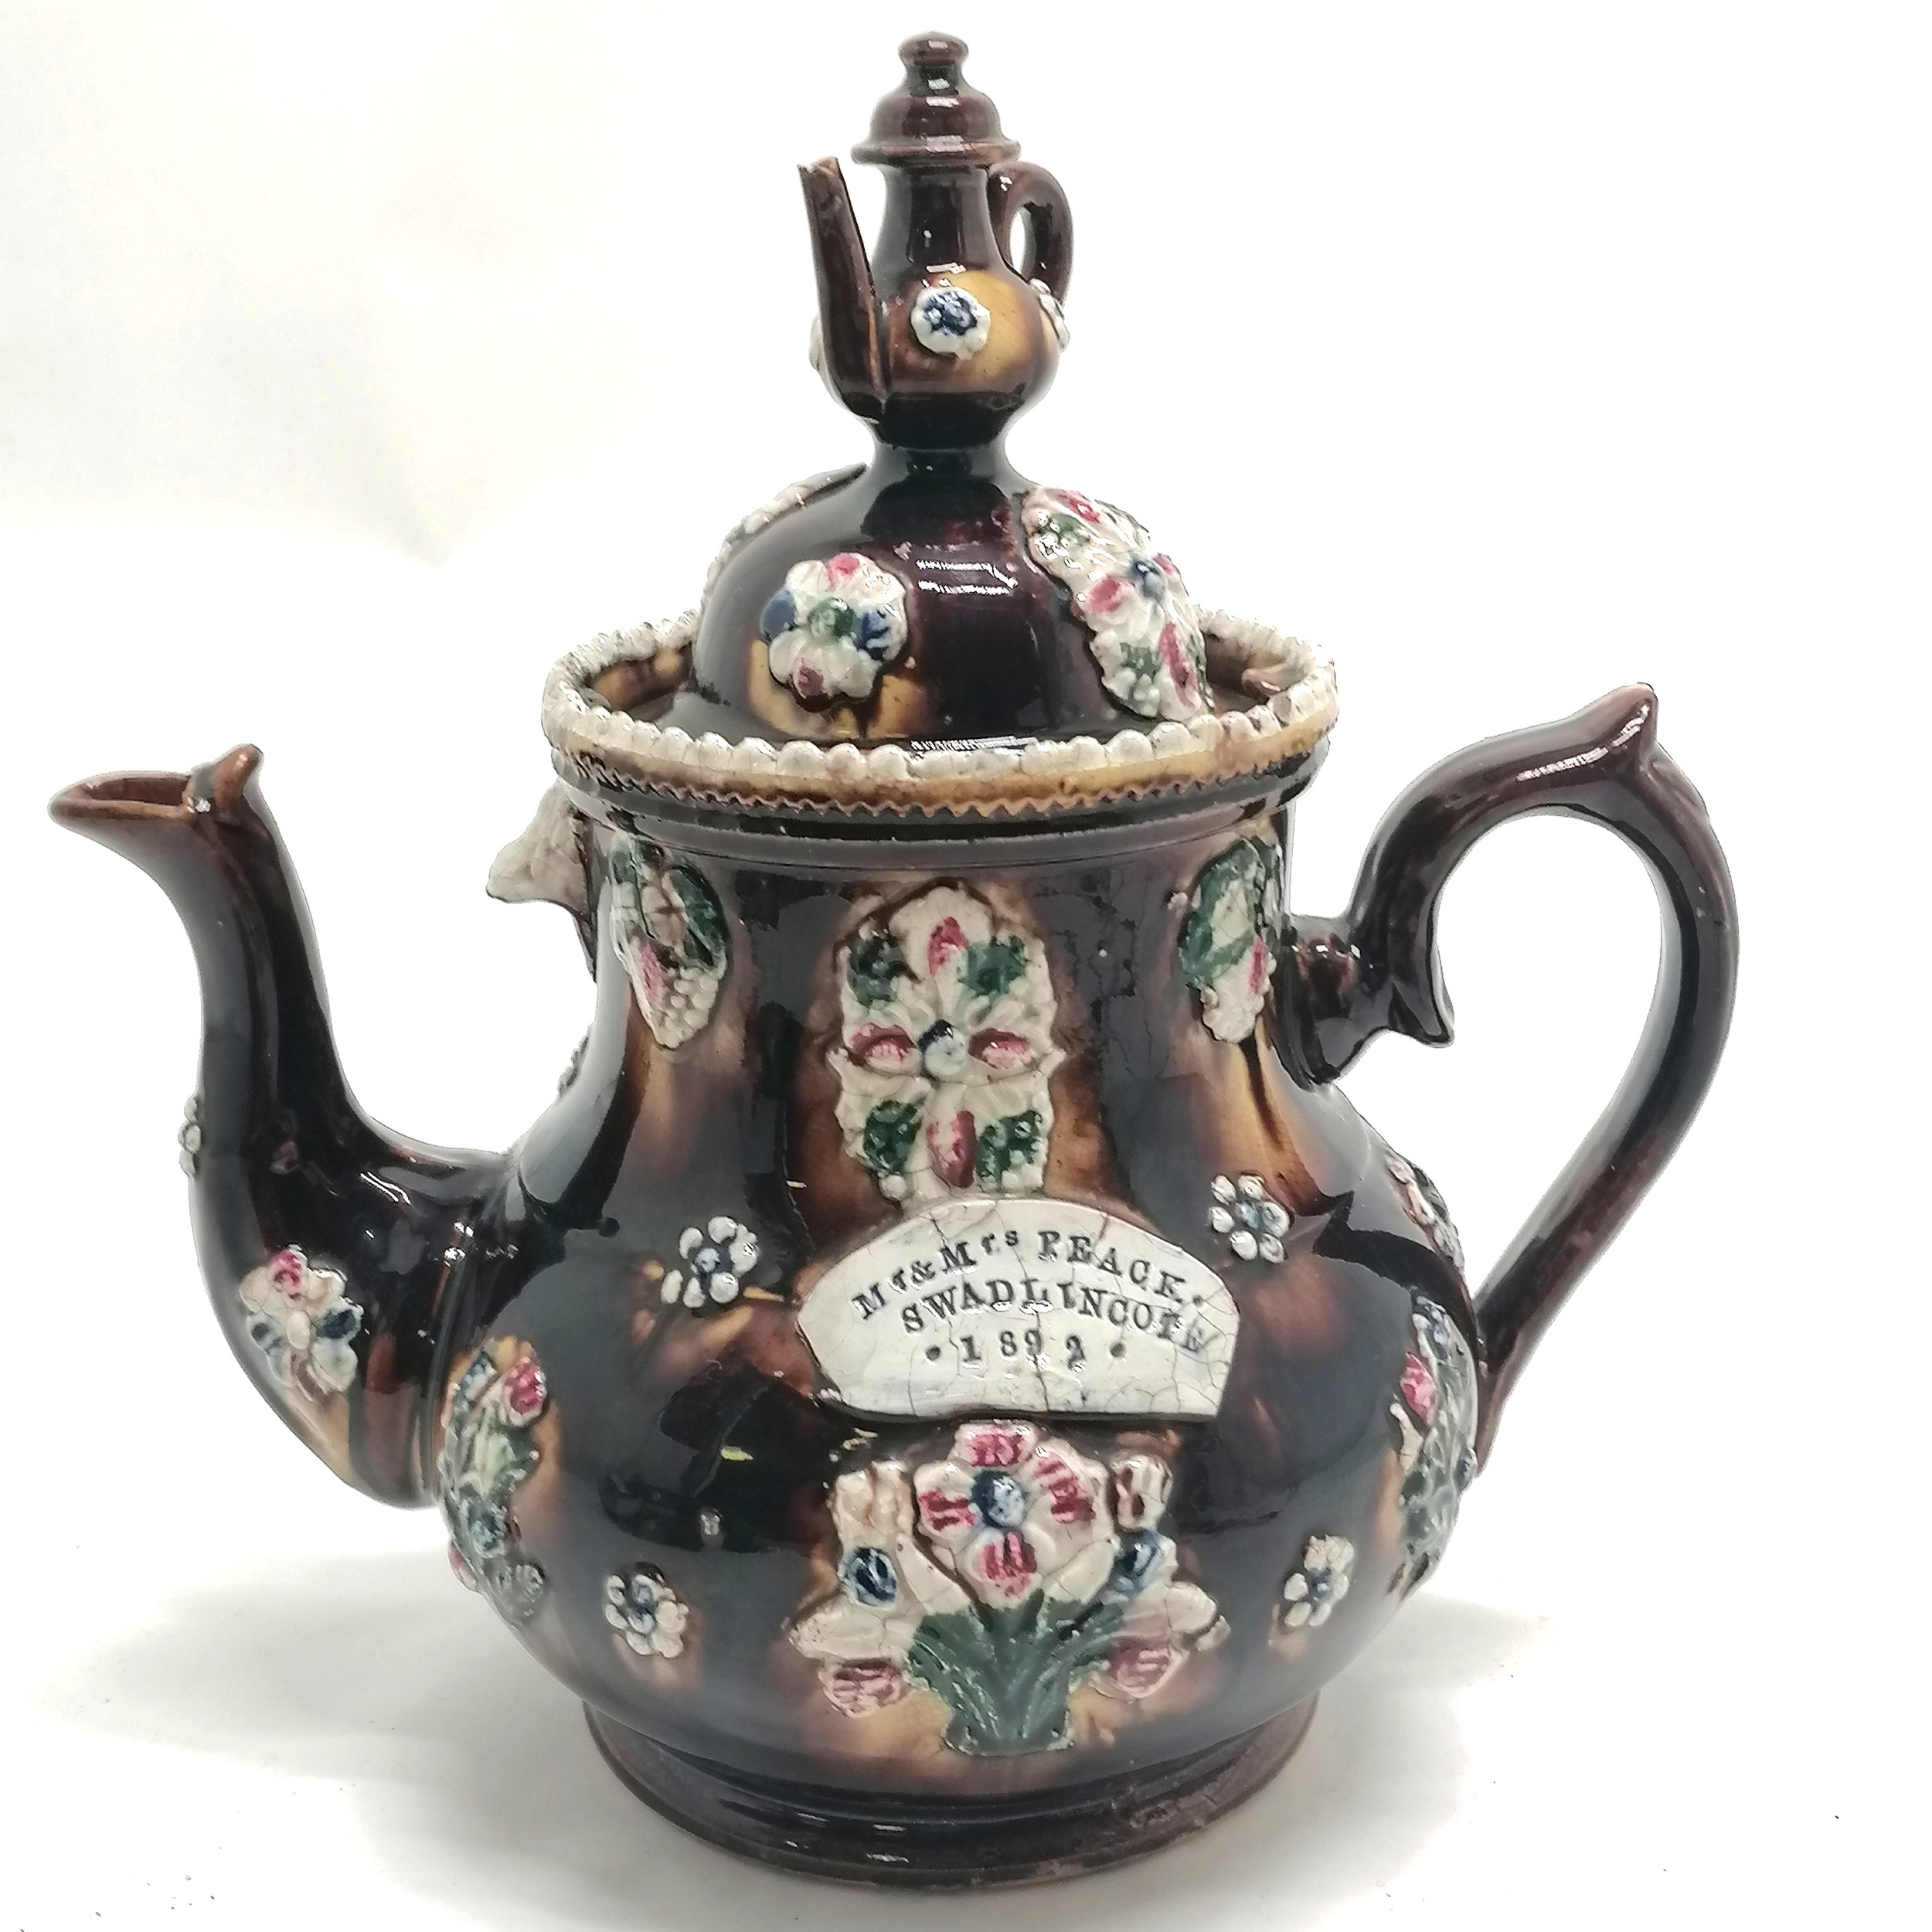 Antique bargeware treacle glaze teapot bearing plaque Mr & Mrs Peack (Peacock) Swadlincote 1892 with